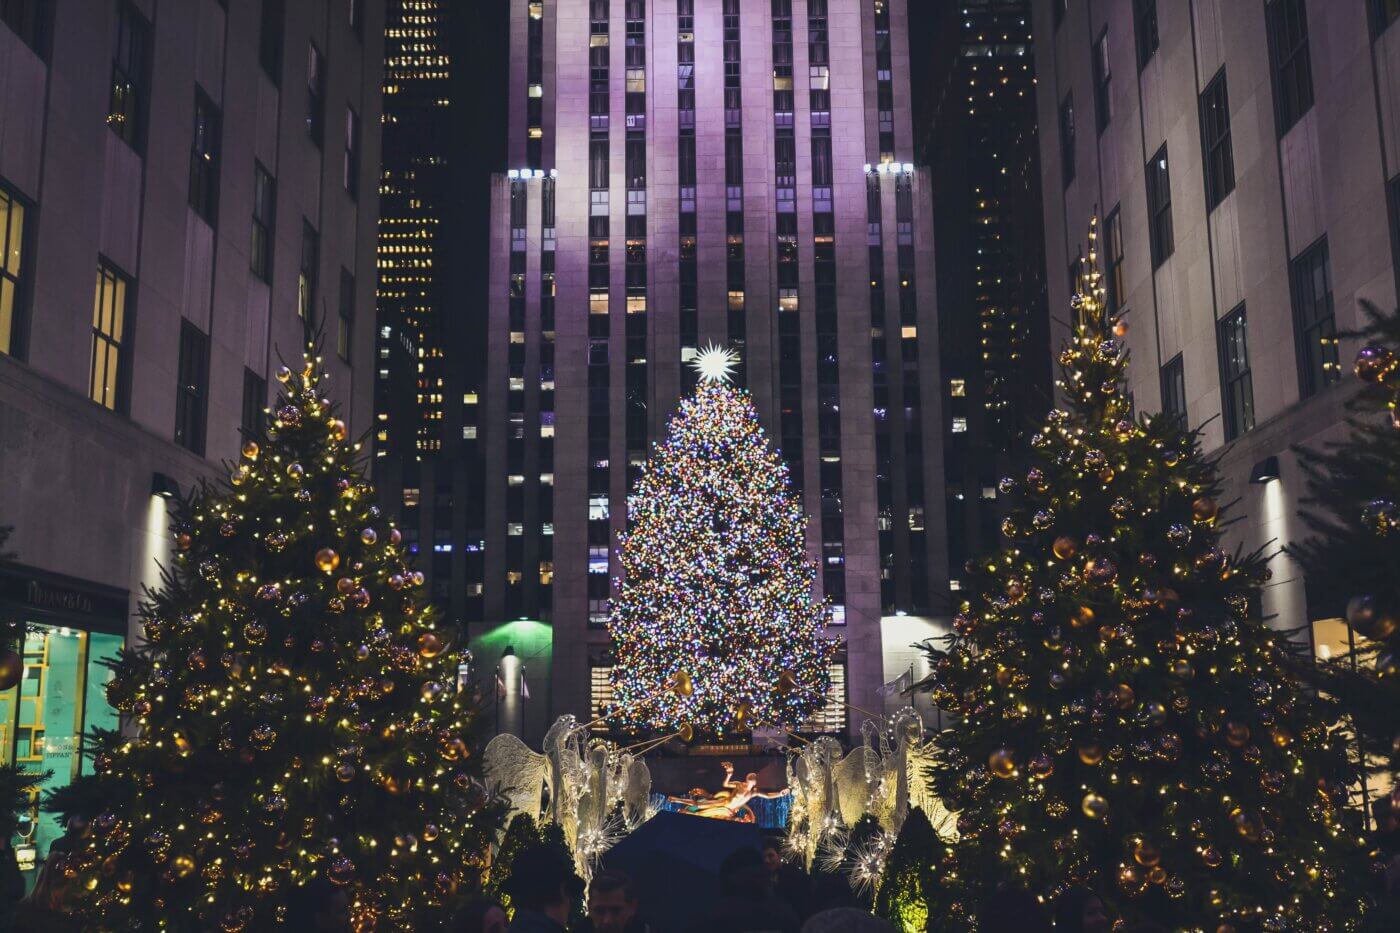 The Christmas tree at Rockefeller Center